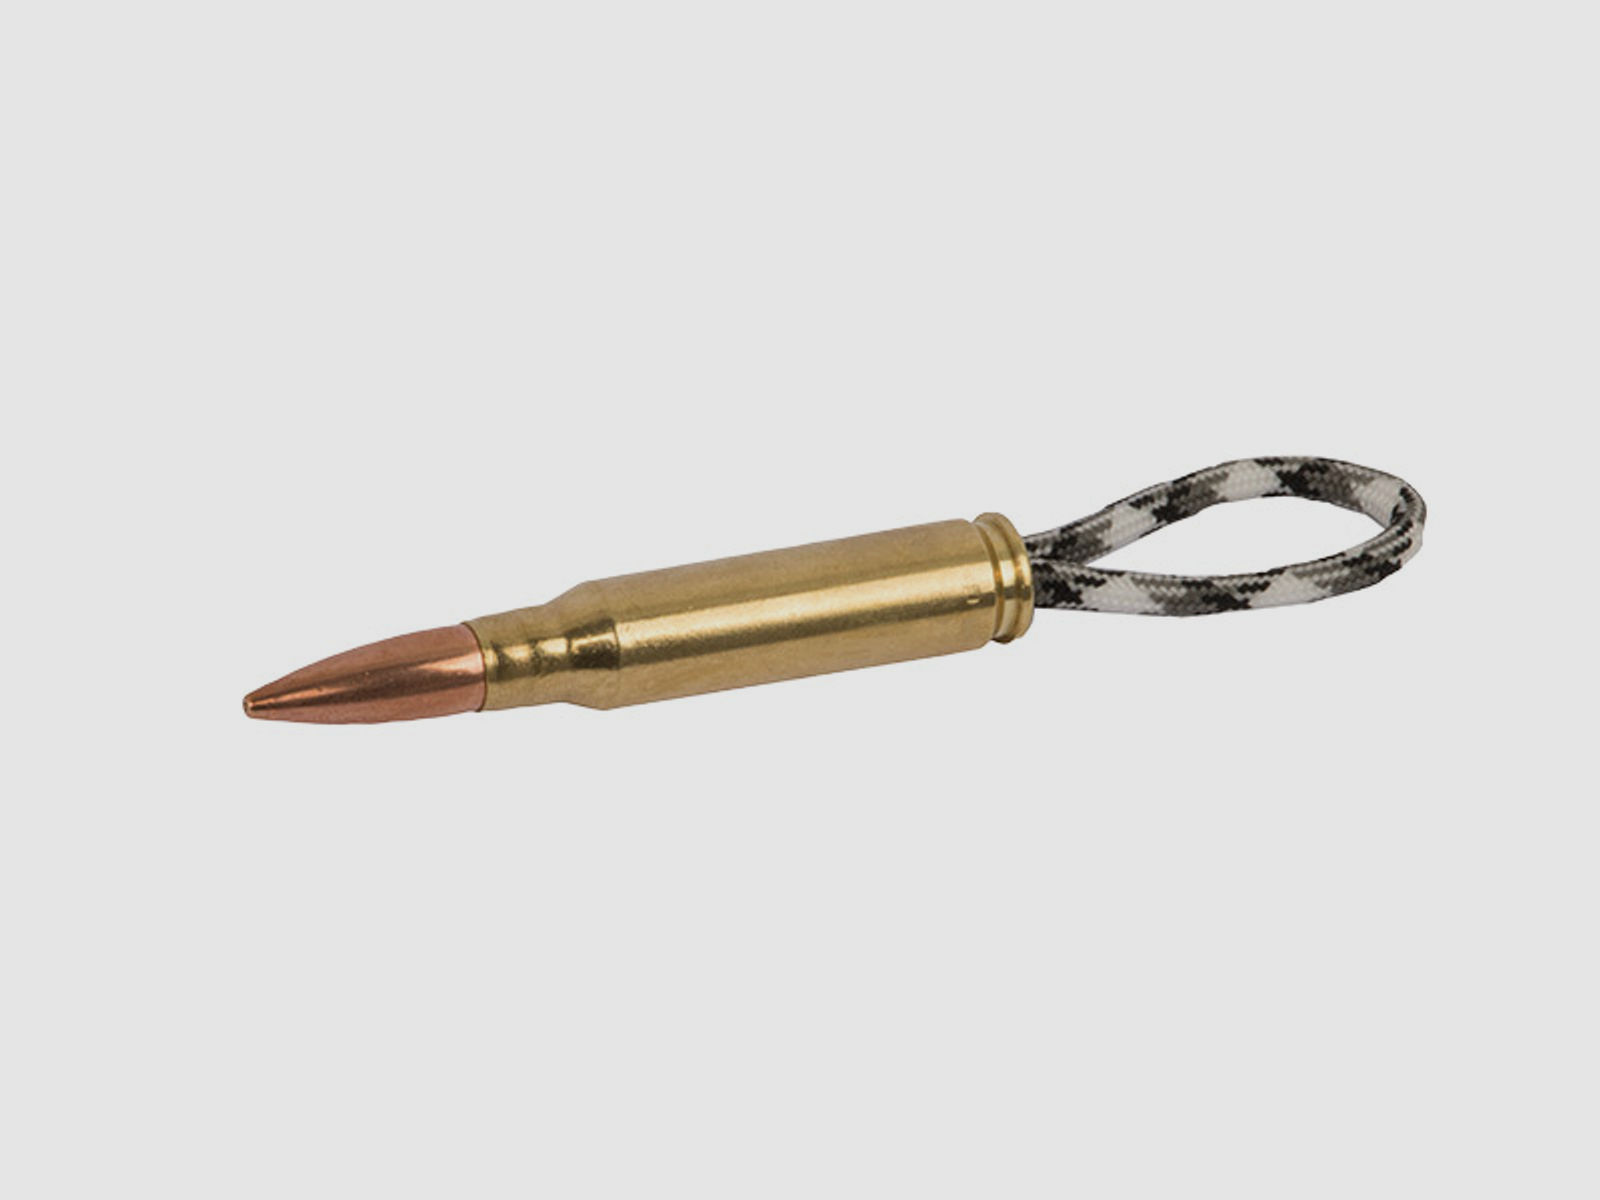 SchlĂĽsselanhĂ¤nger Parachute Cord Kaliber 7,62 x 51 mm NATO .308 Winchester Patrone gemustert schwarz grau weiĂź handgefertigt